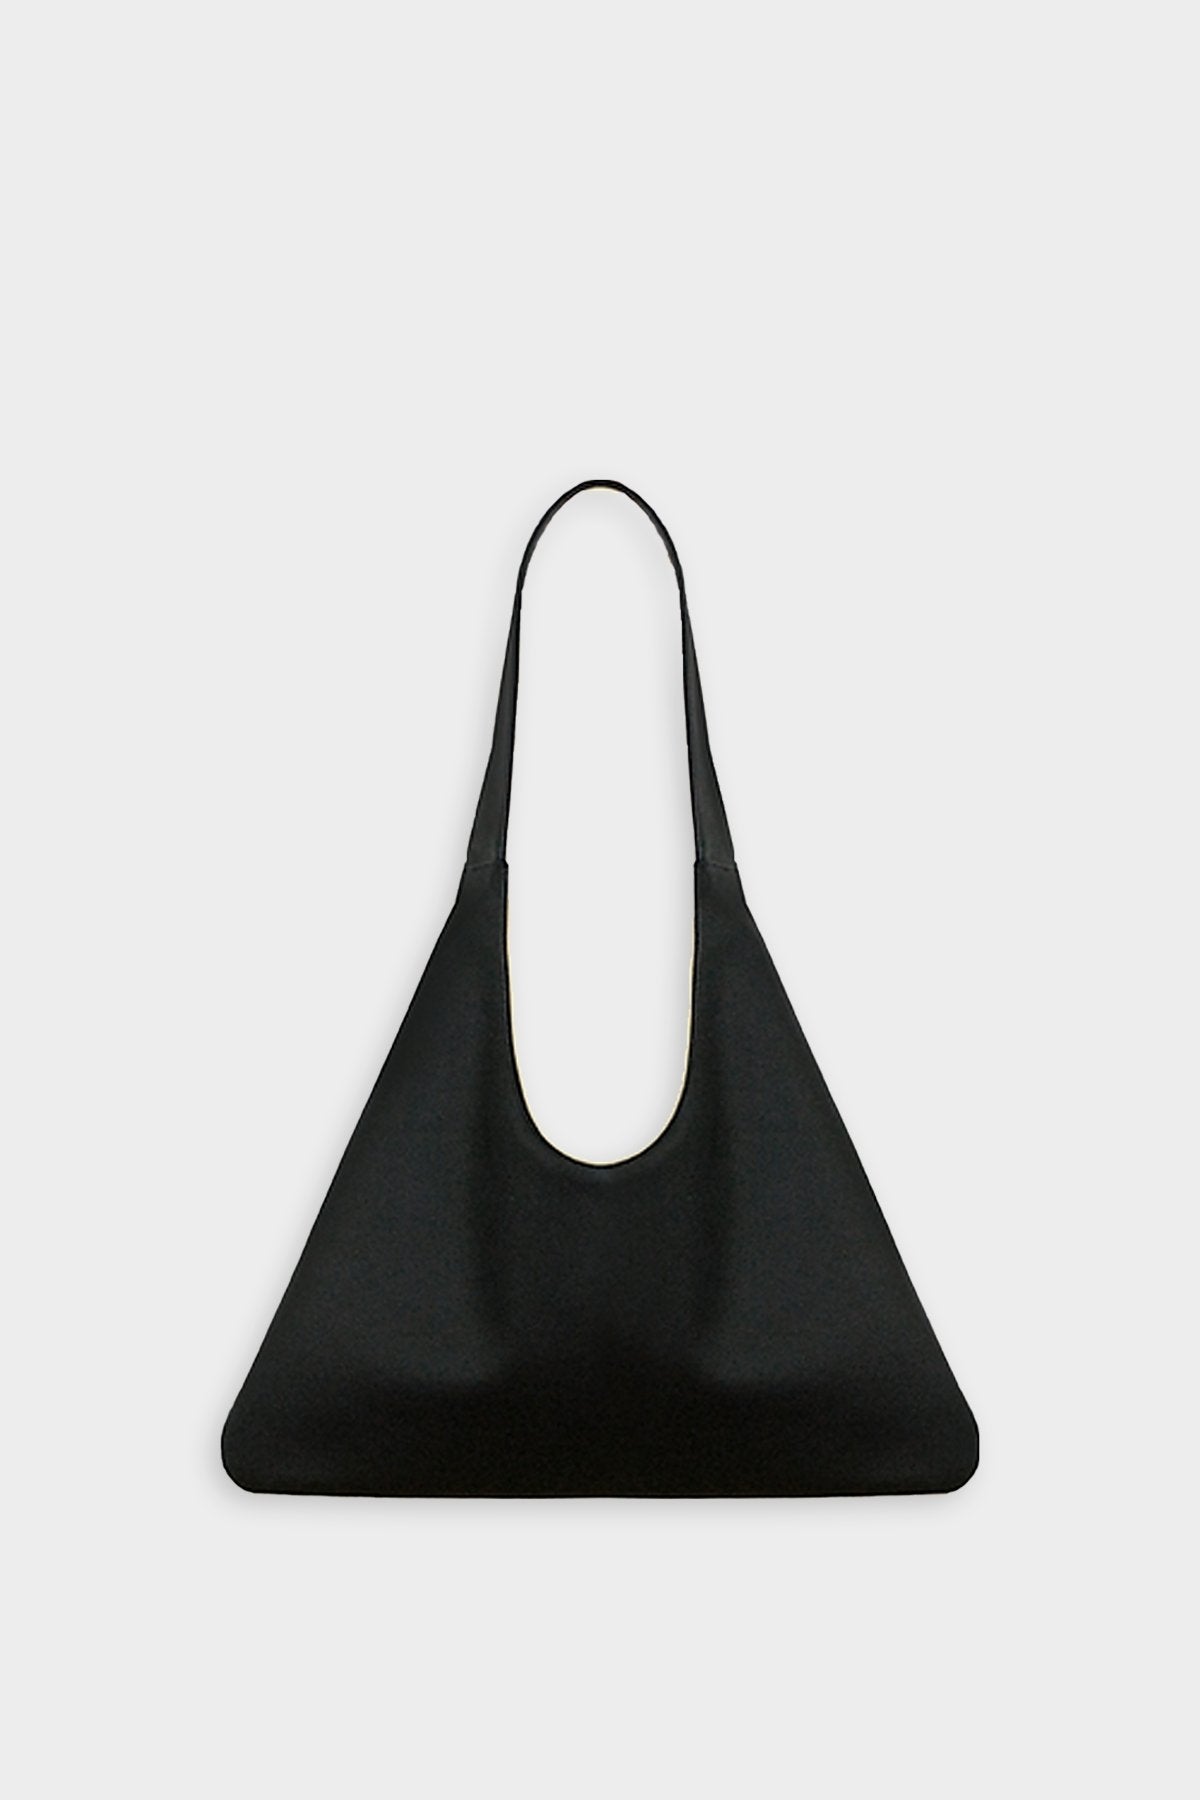 Agave Triangular Tote Bag in Black - shop-olivia.com